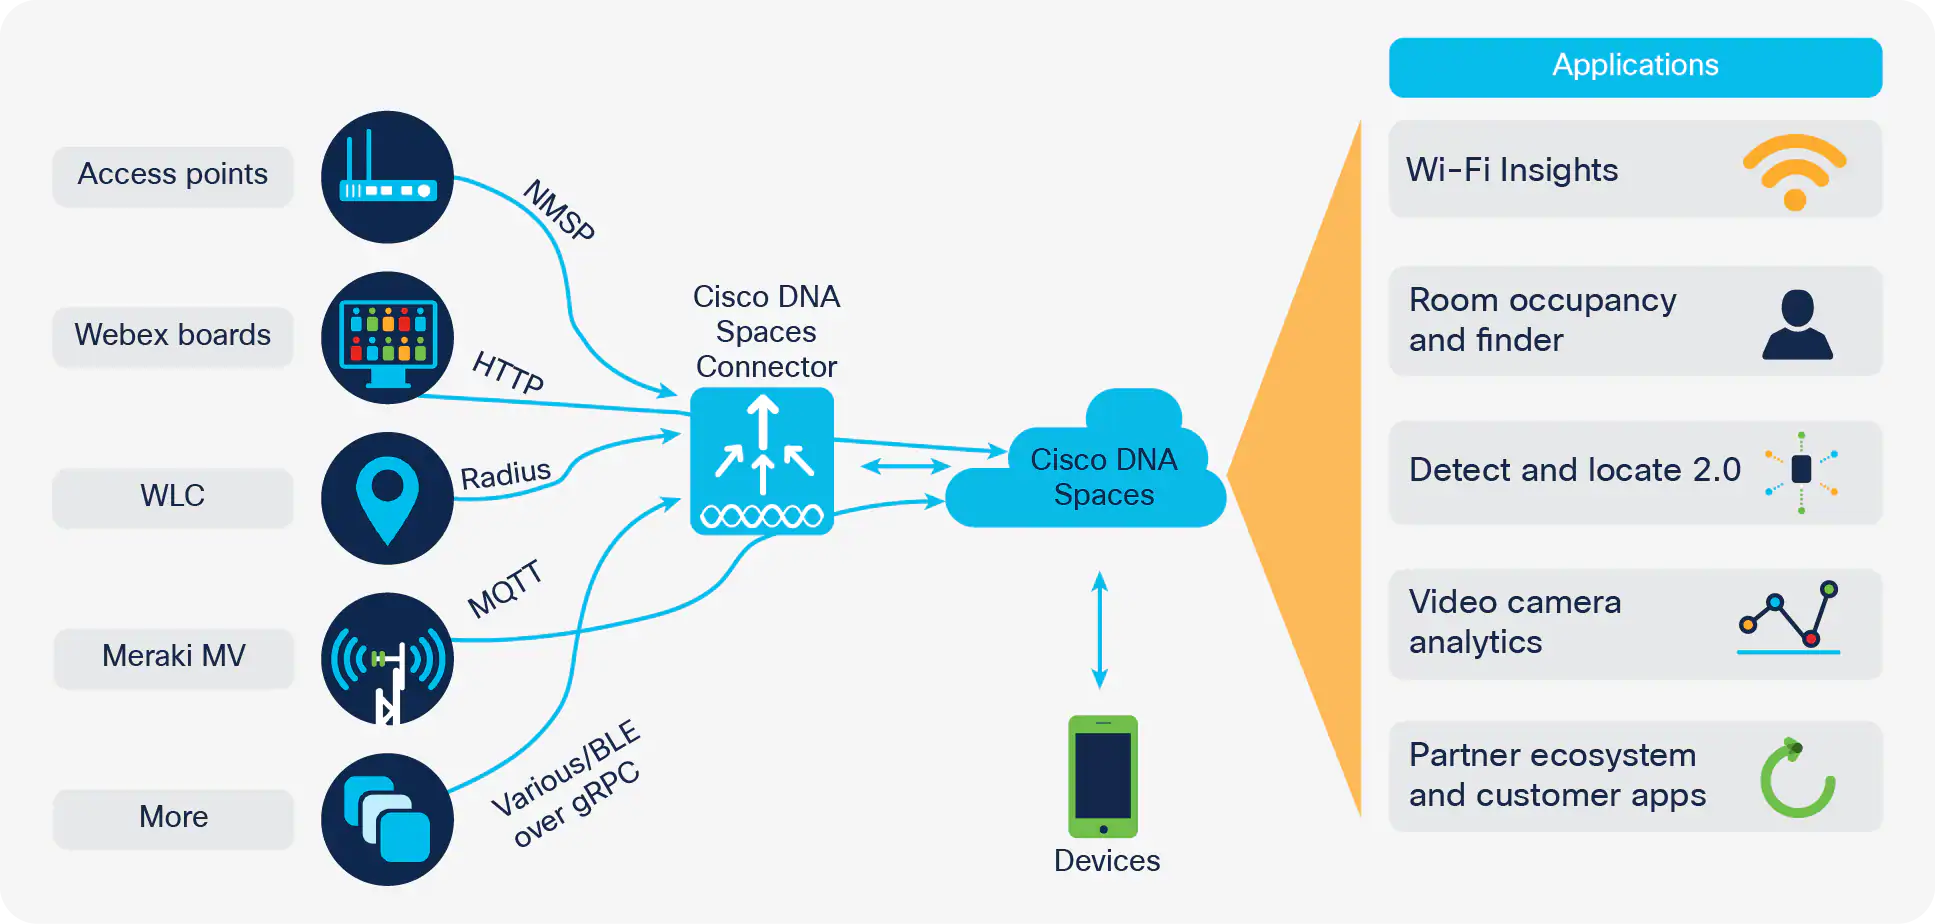 Cisco DNA image